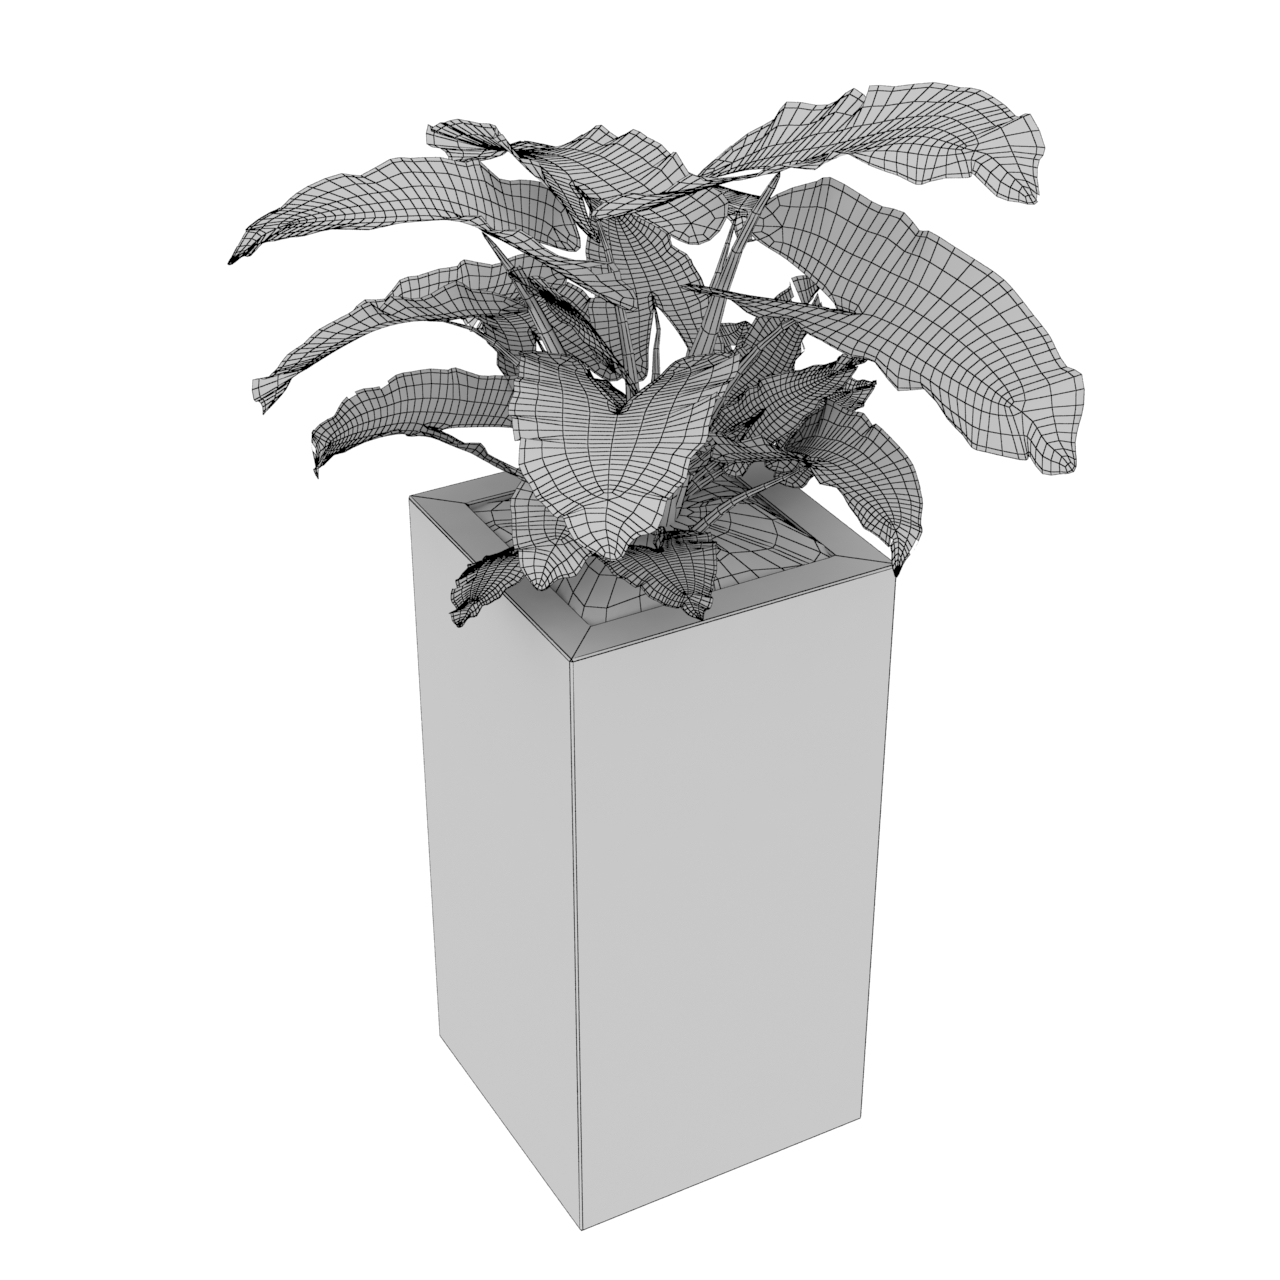 foliage plants 3d model